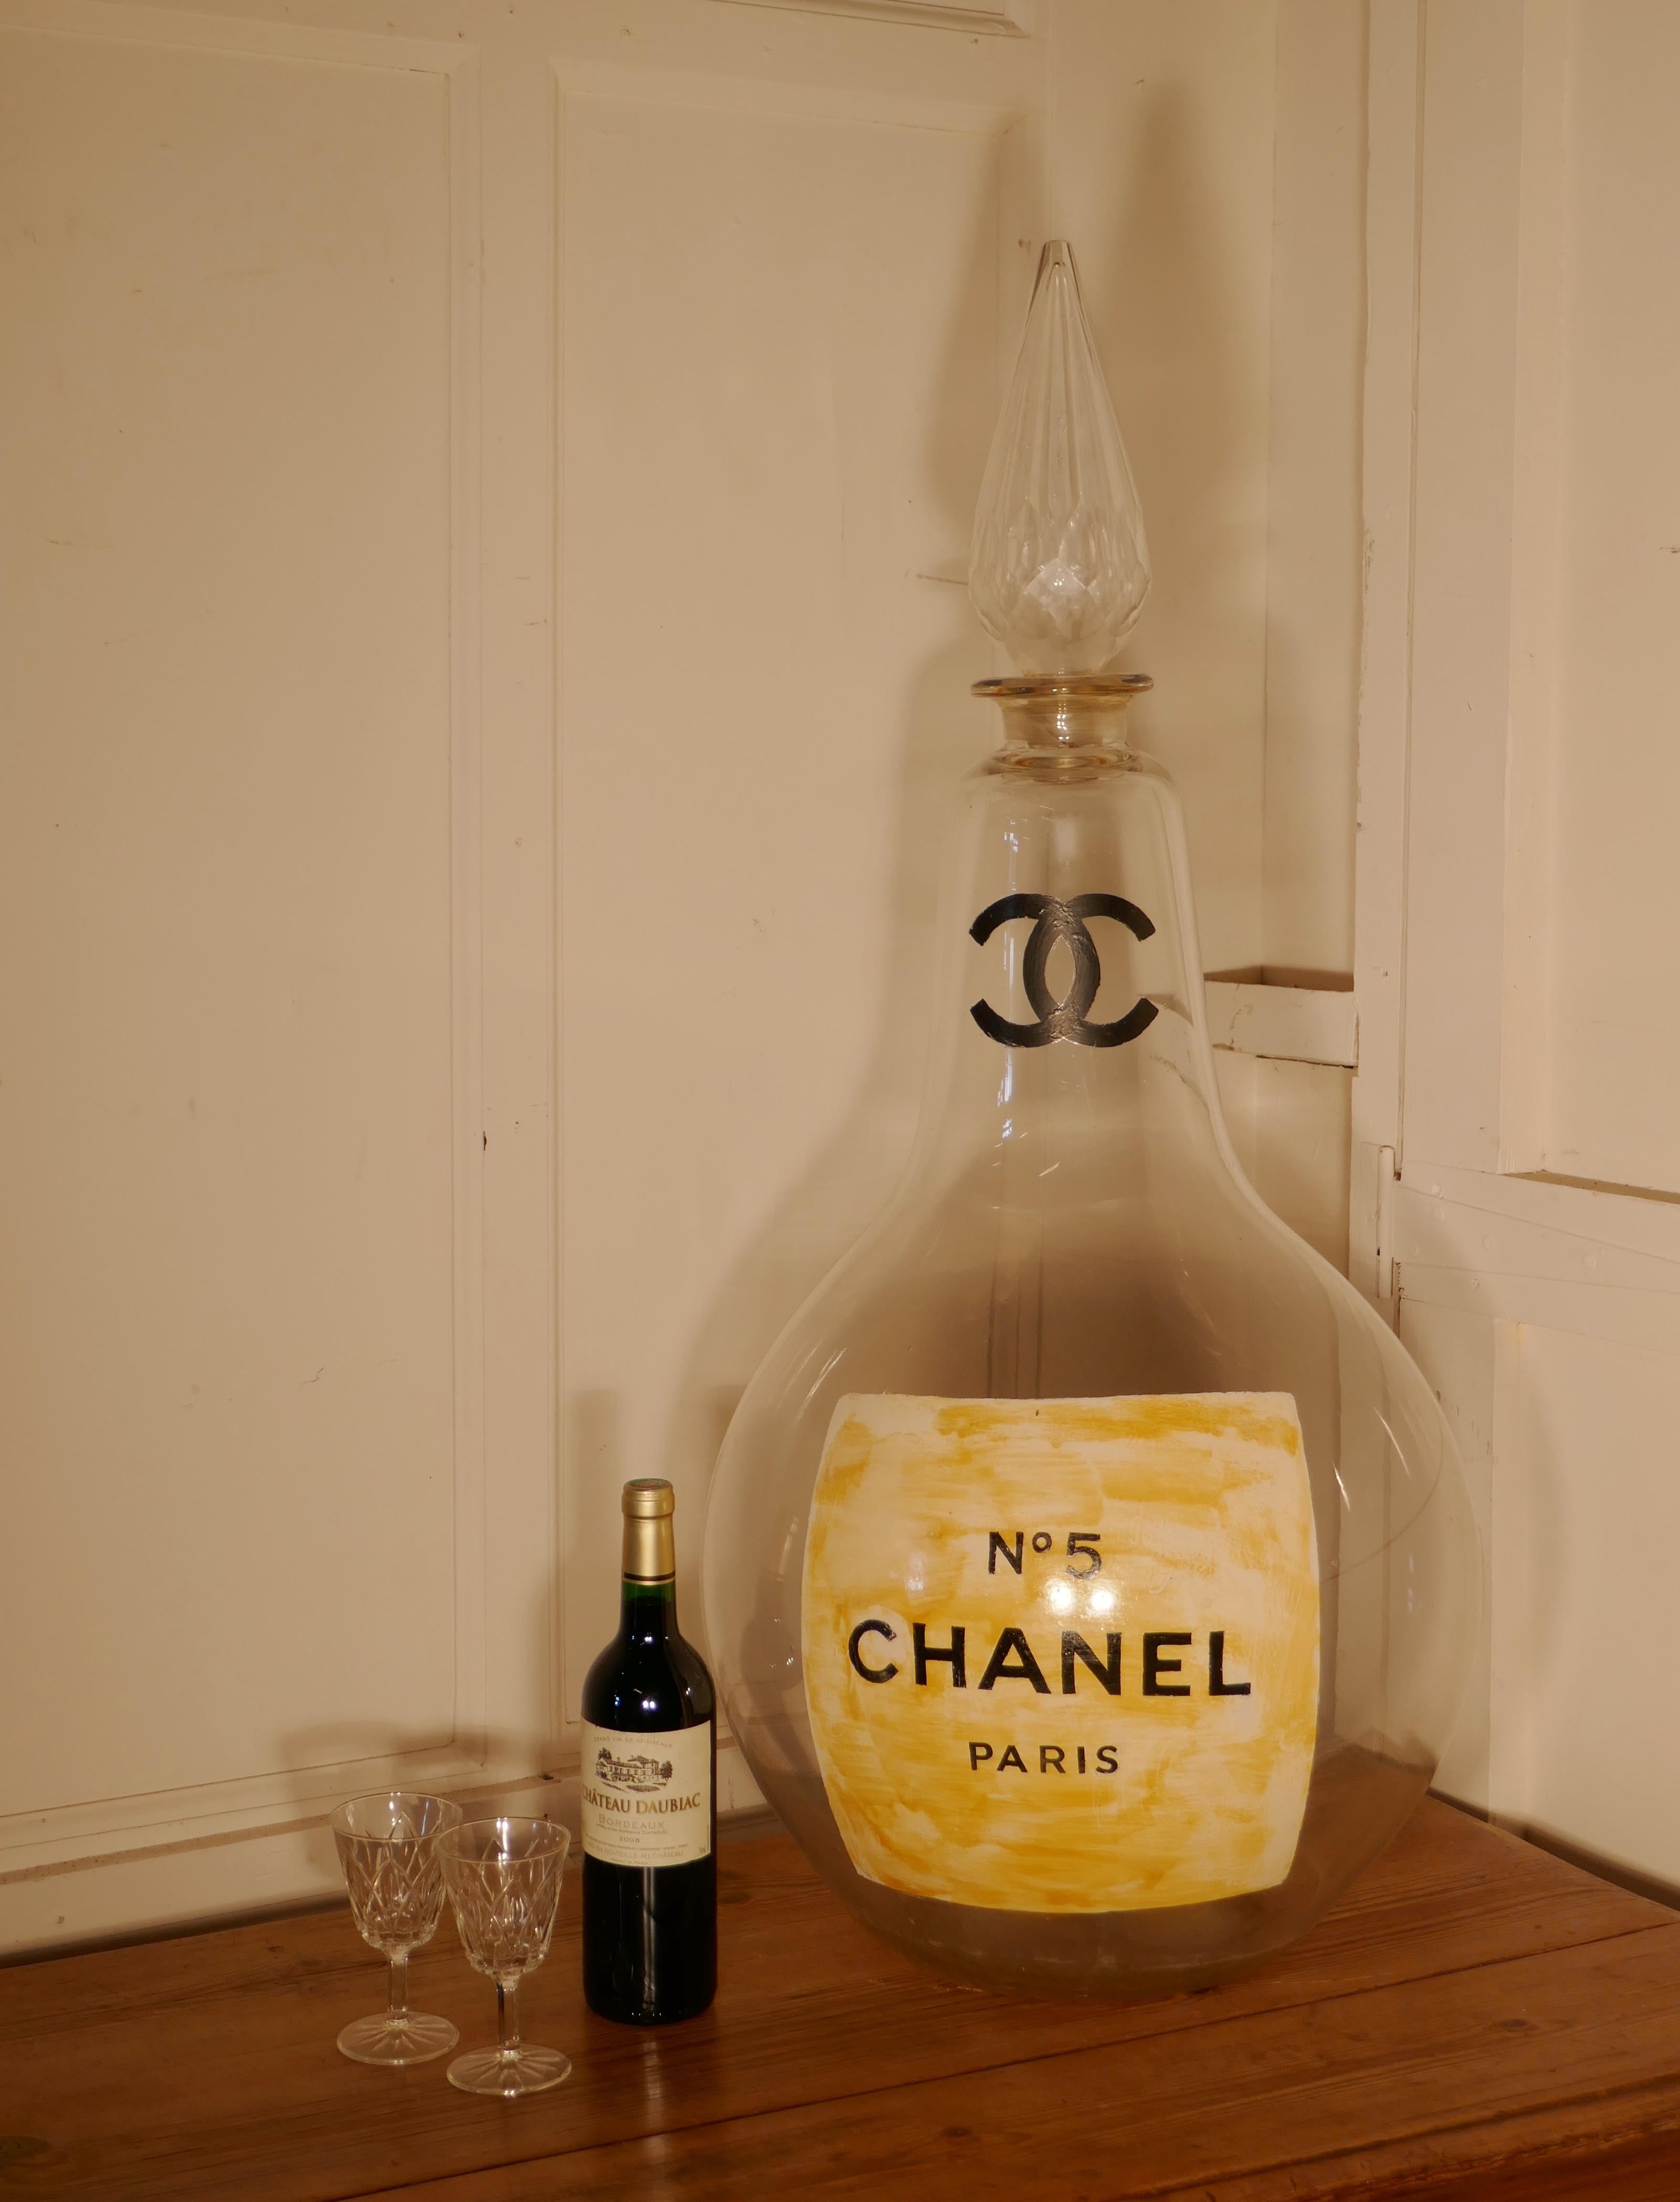 chanel no 5 large display bottle